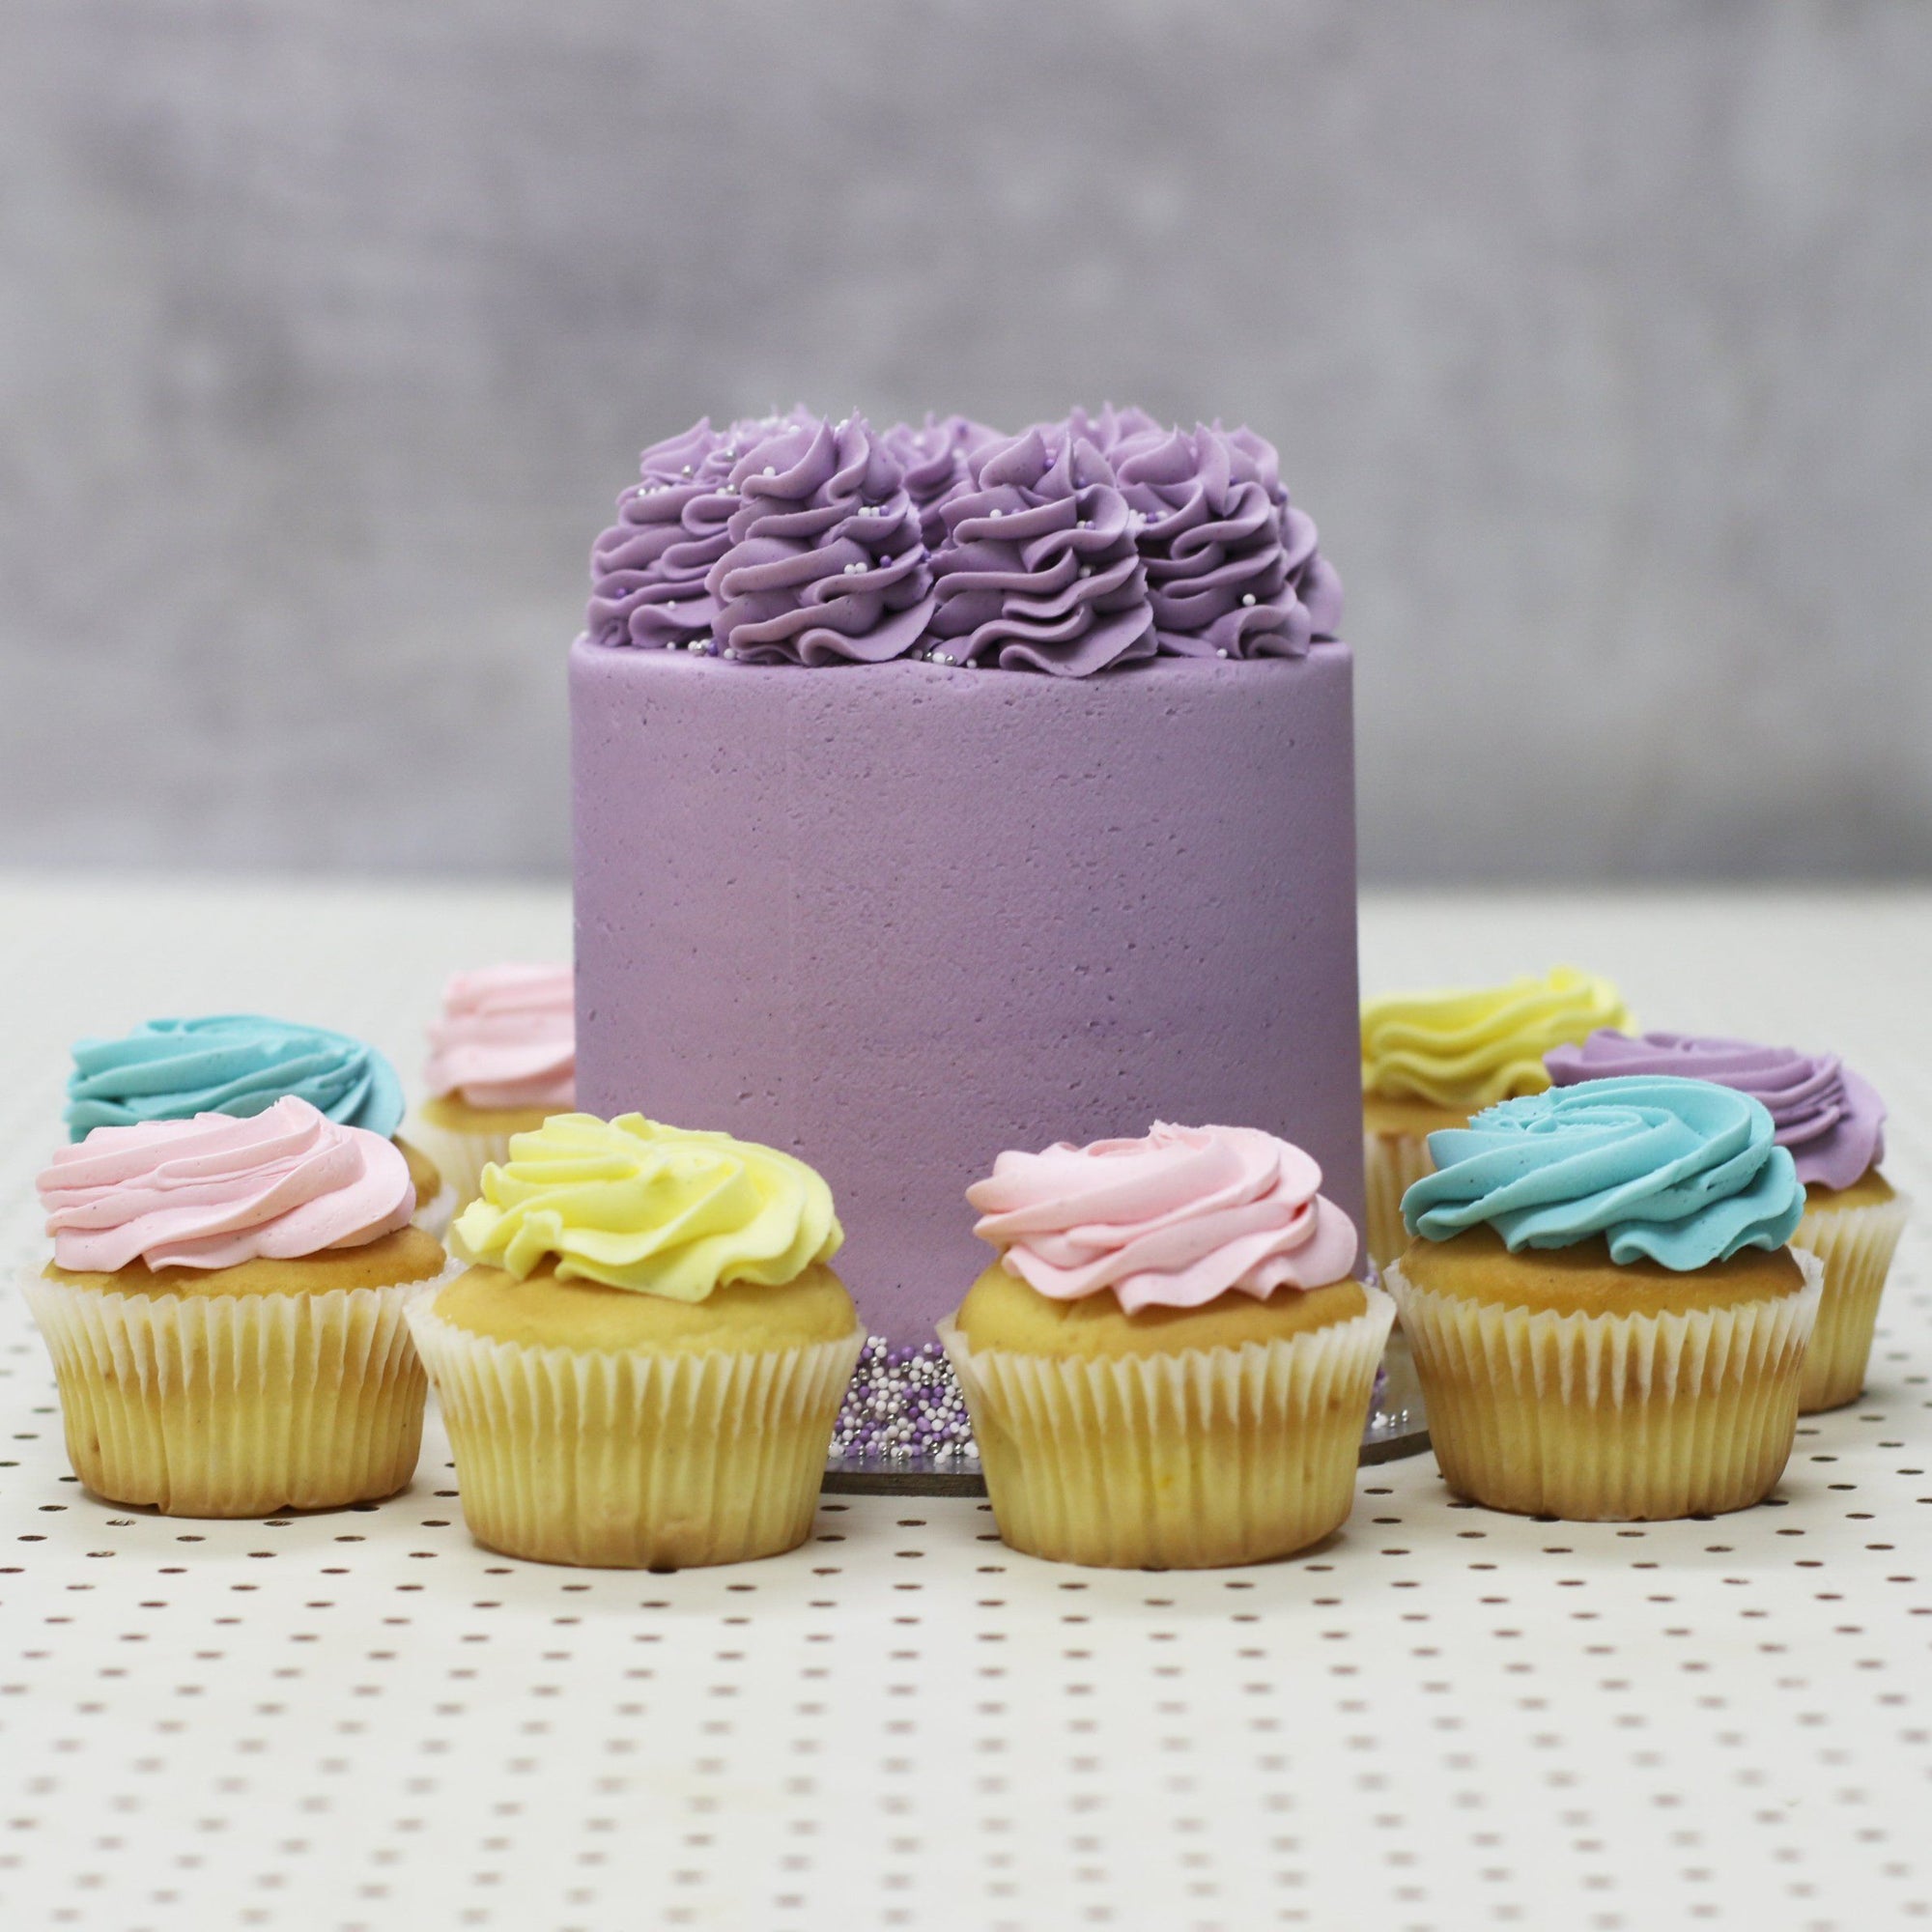 Pastel Purple Cake Cakes The Cupcake Queens 